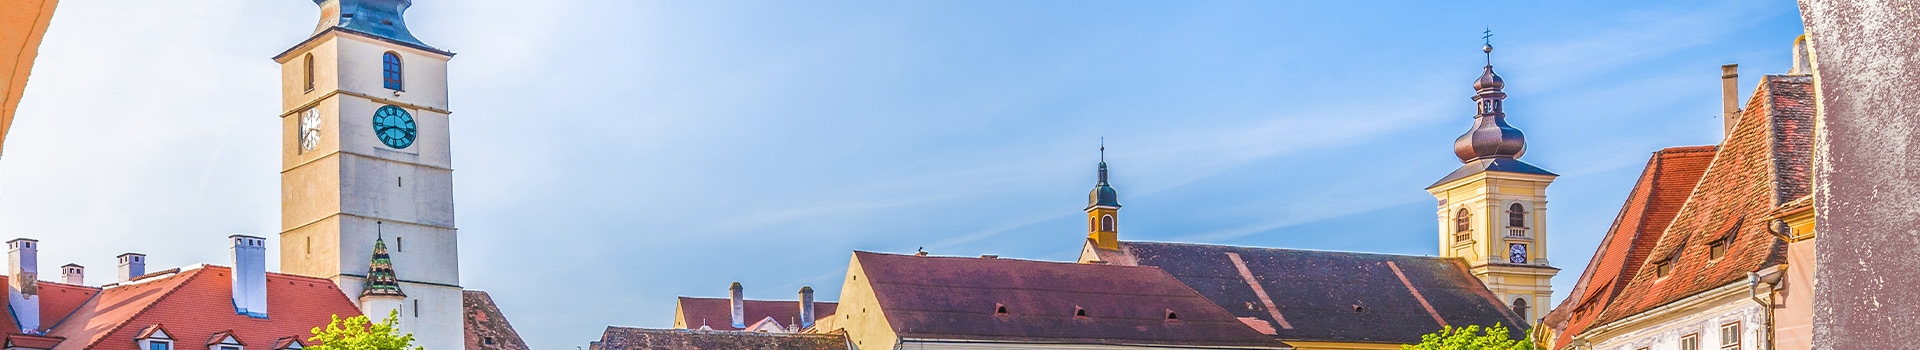 Nuremberg - Sibiu international